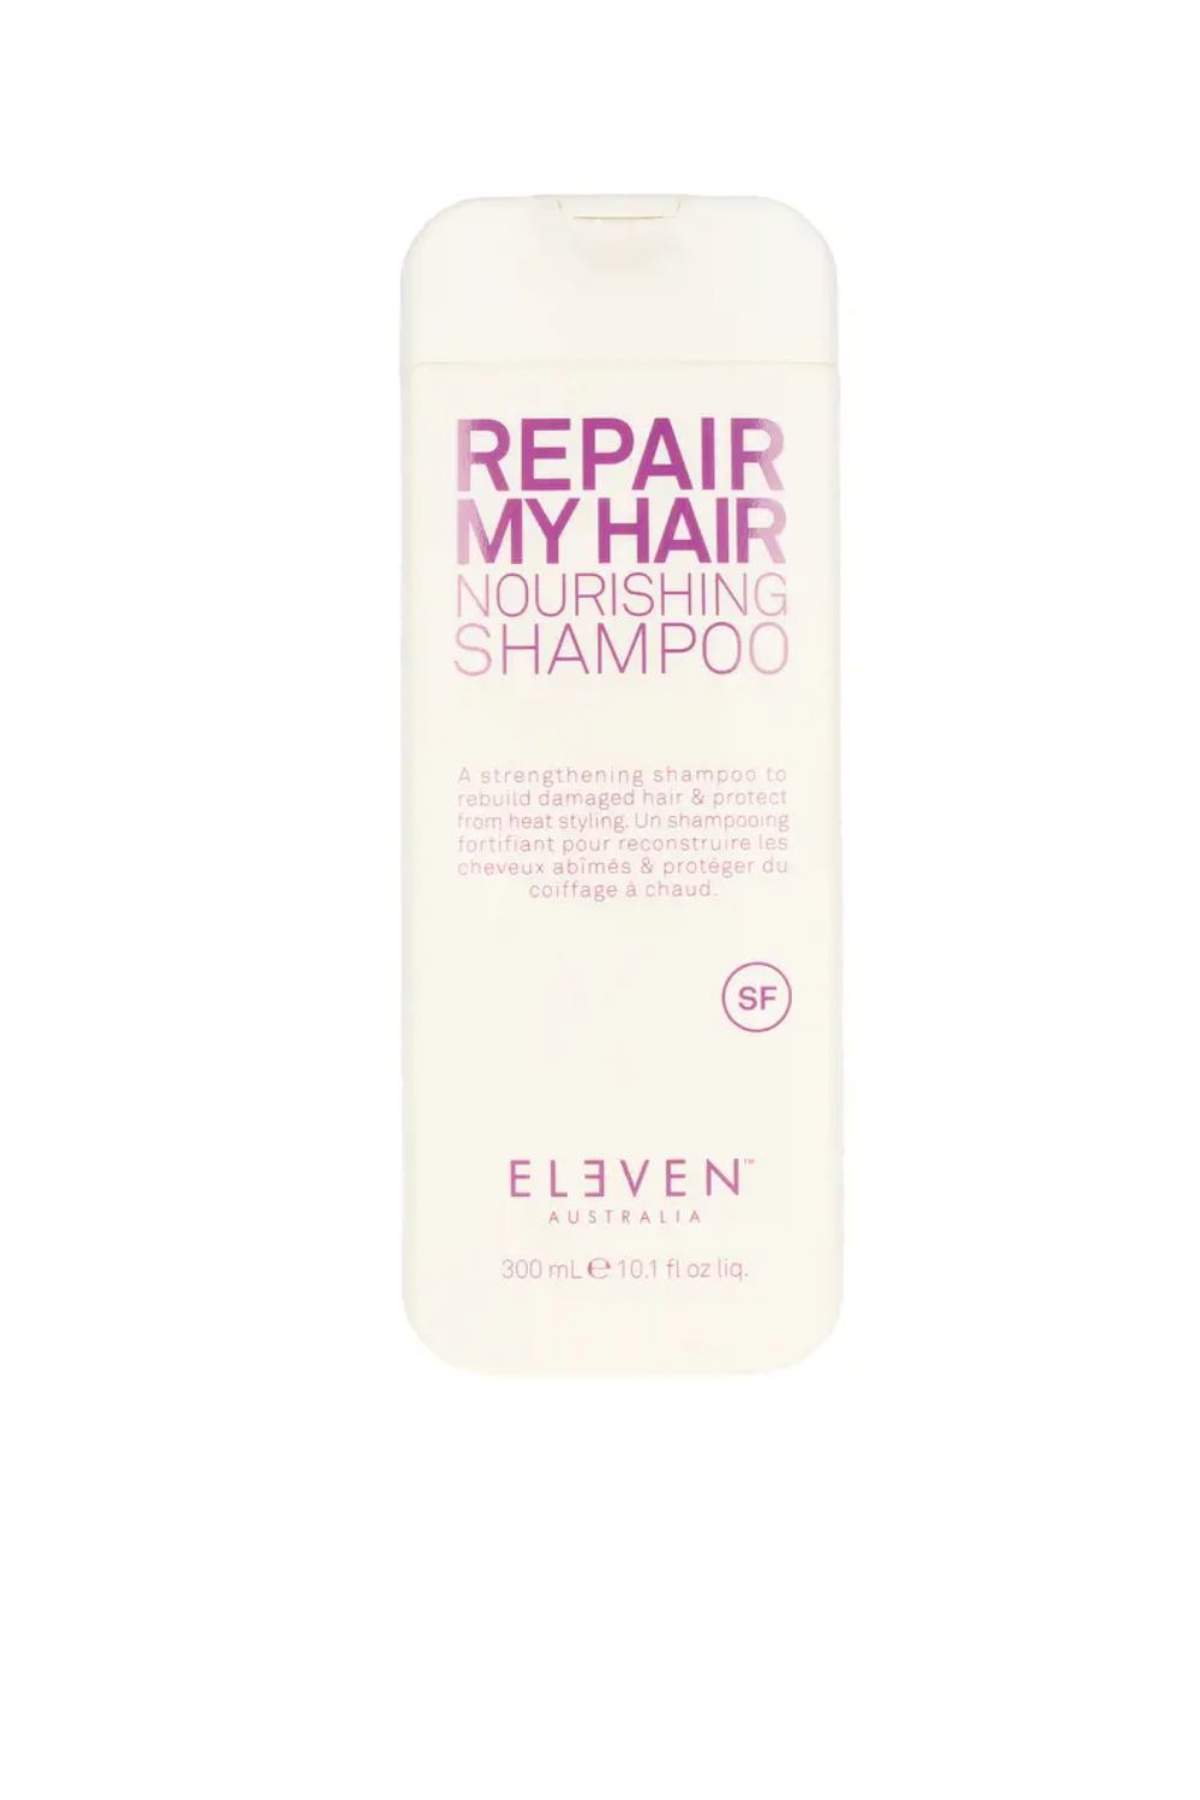 REPAIR MY HAIR nourishing shampoo de Eleven Australia